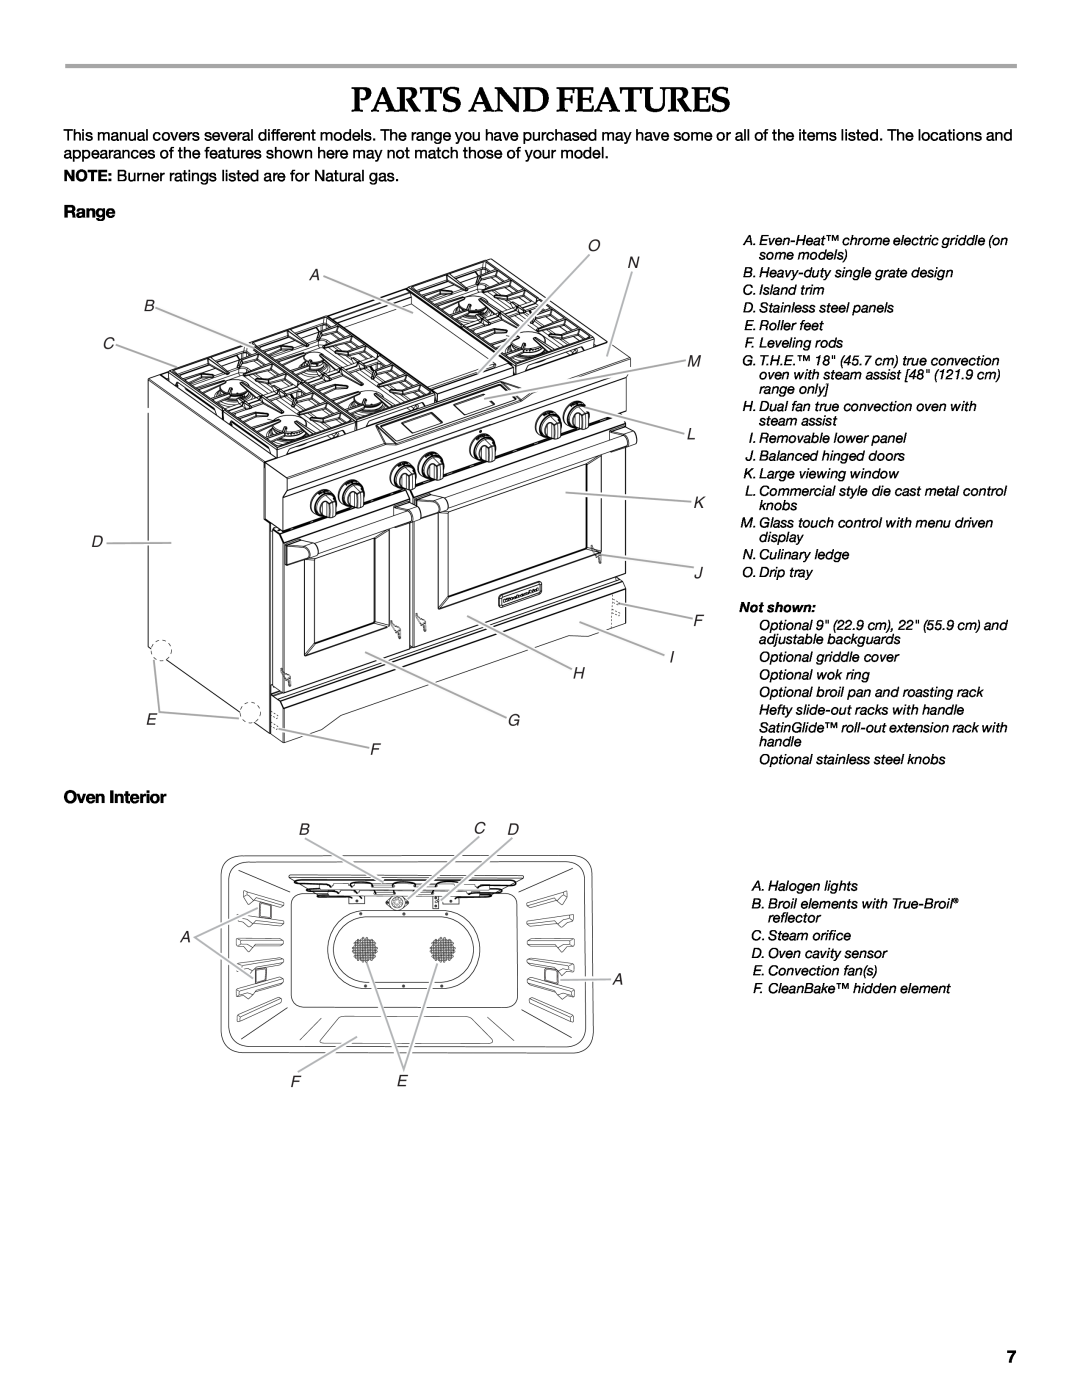 KitchenAid KDRU763.KDRU manual Parts And Features, Range, Oven Interior, Bc D A 